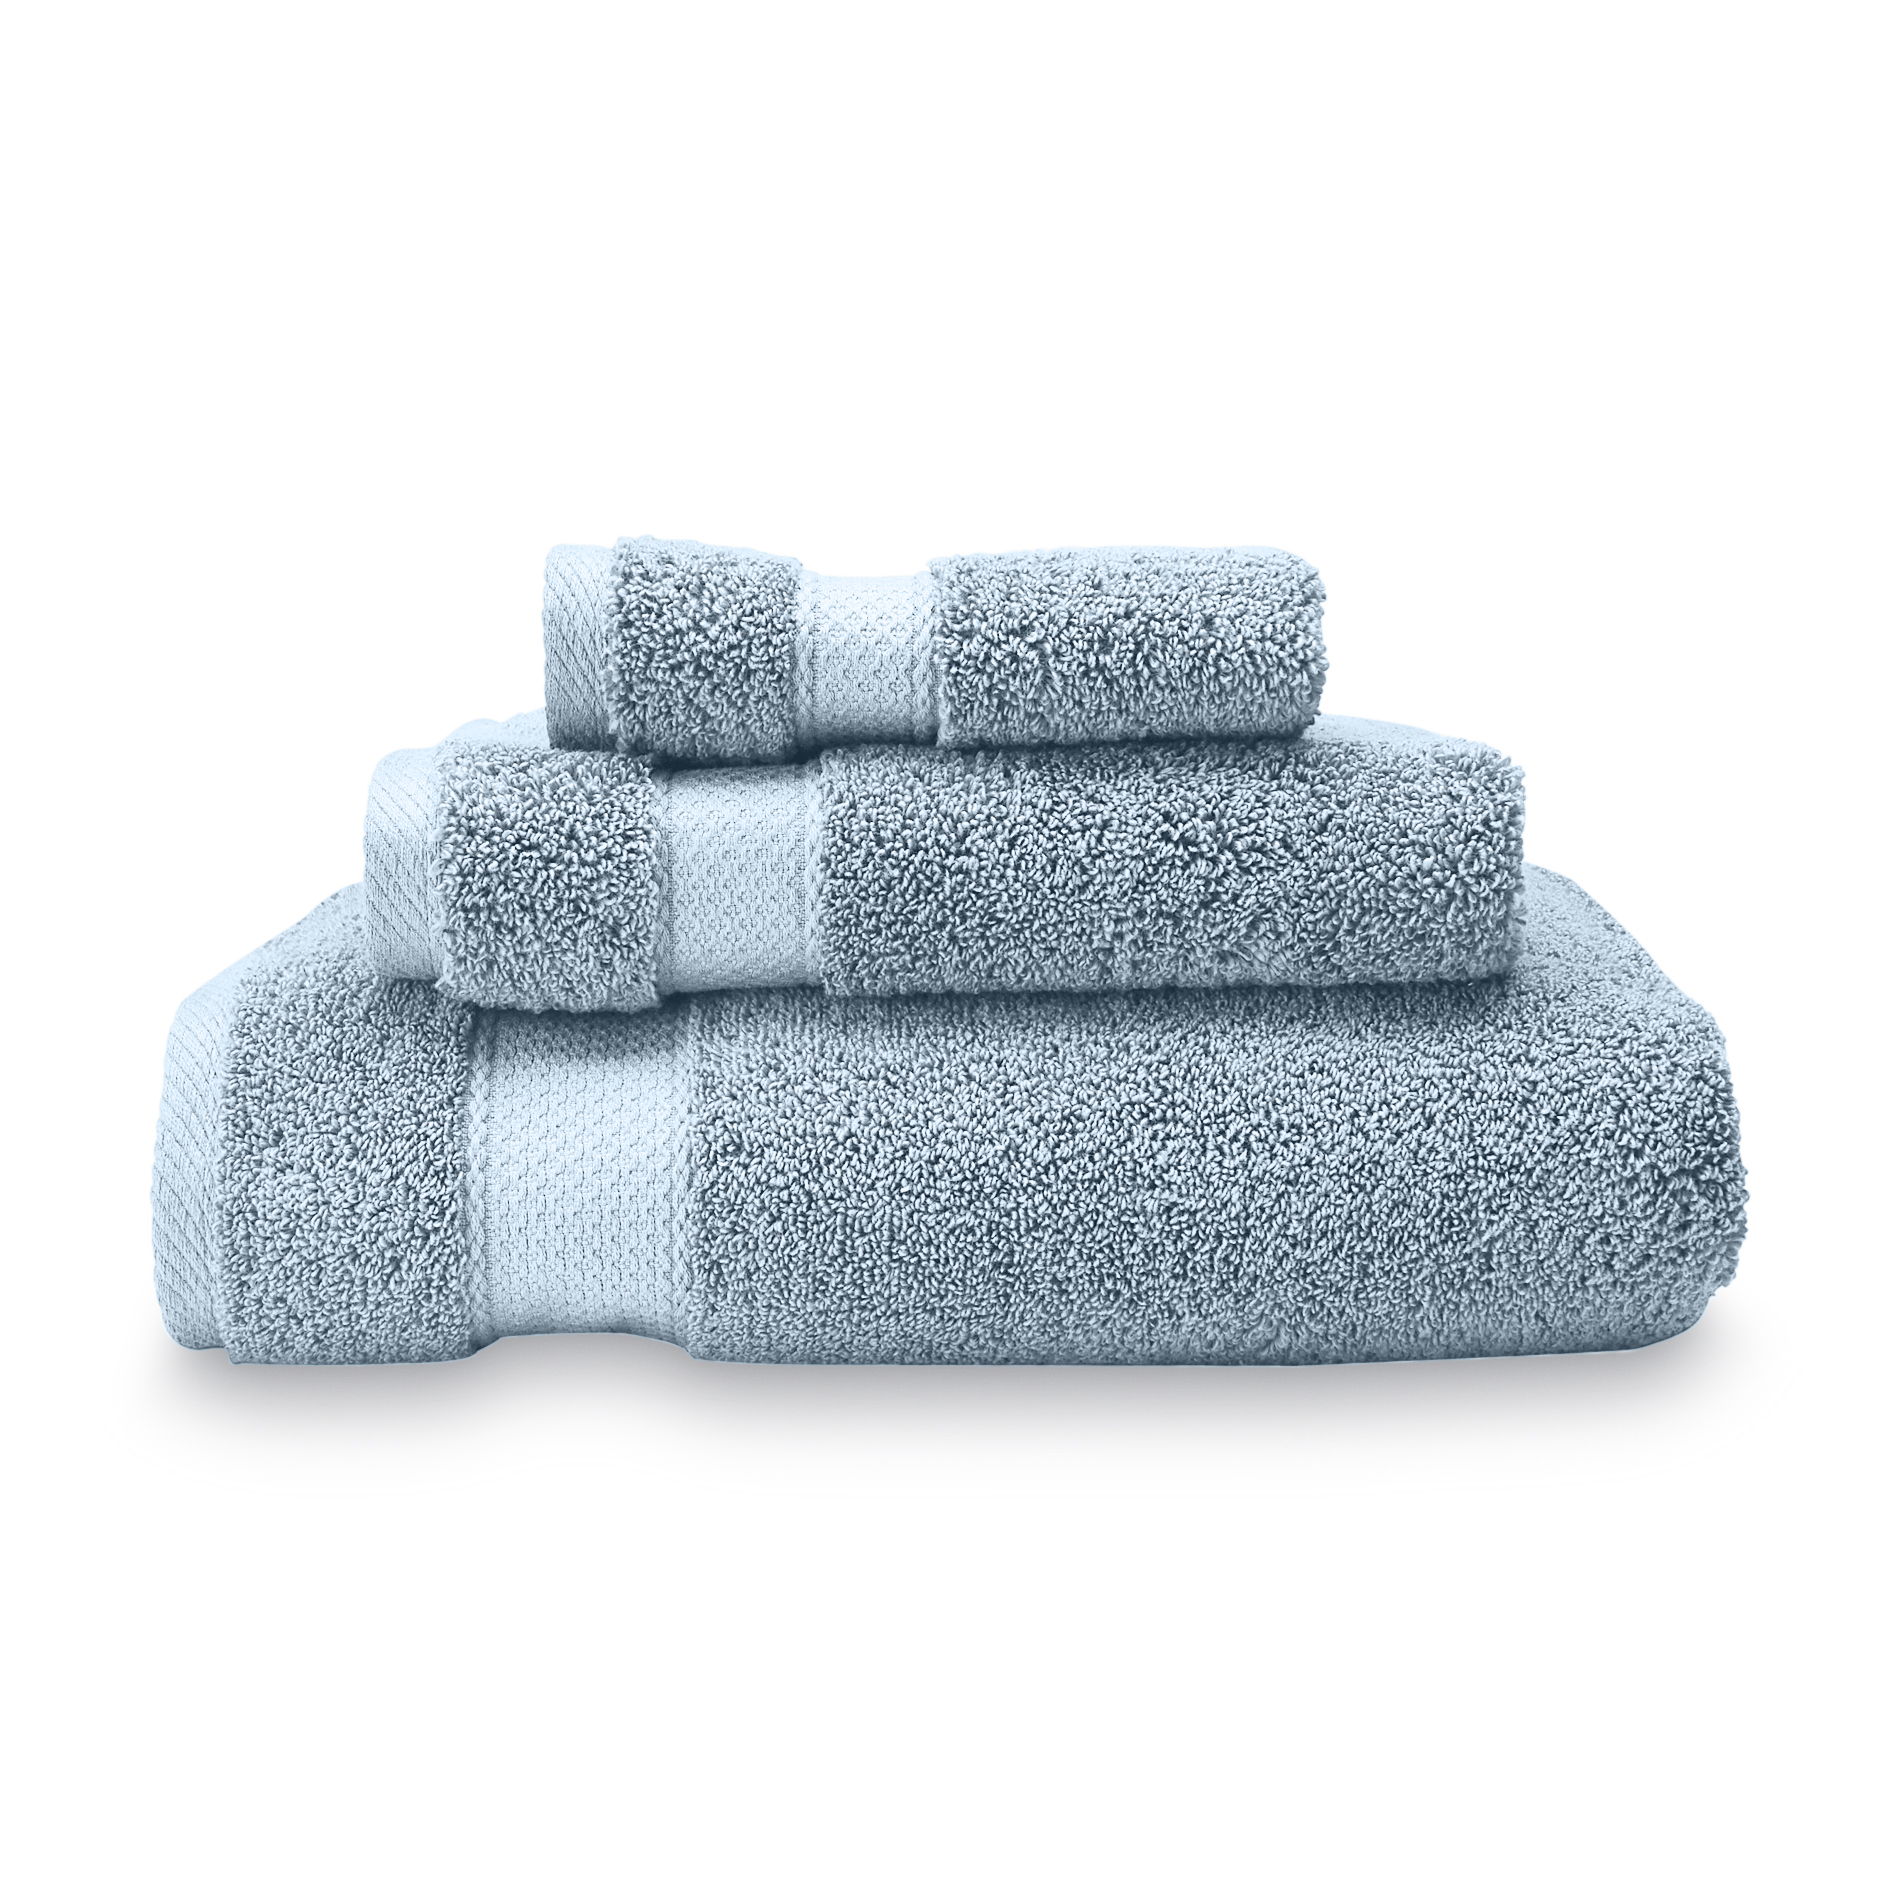 Egyptian Cotton Bath Towels  Bath Sheets Hand Towels or Washcloths